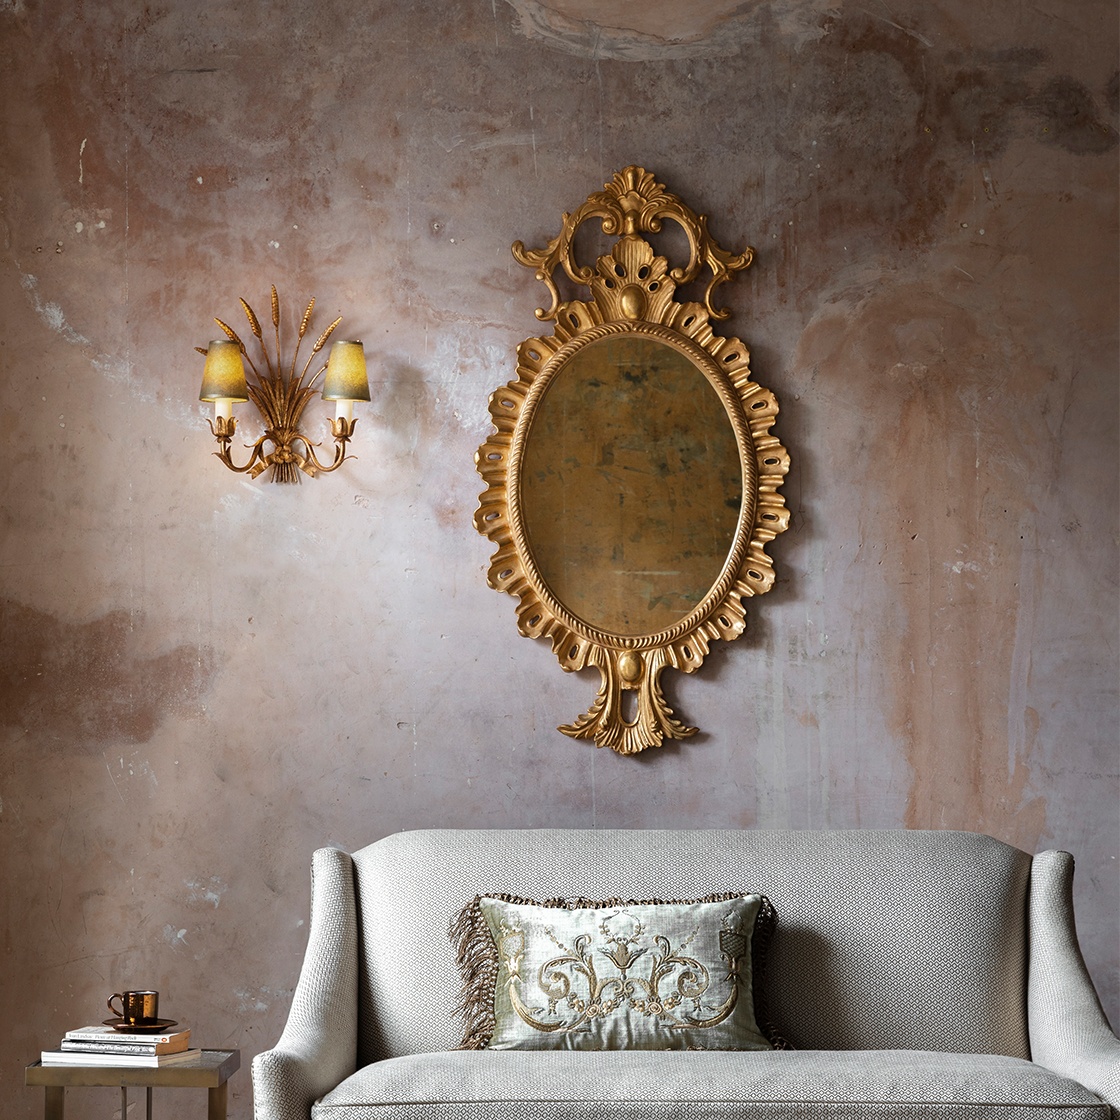 Belgrave mirror in Venice gold with Alexandra sofa and Thalia cushion and Wheatsheaf light - Beaumont & Fletcher